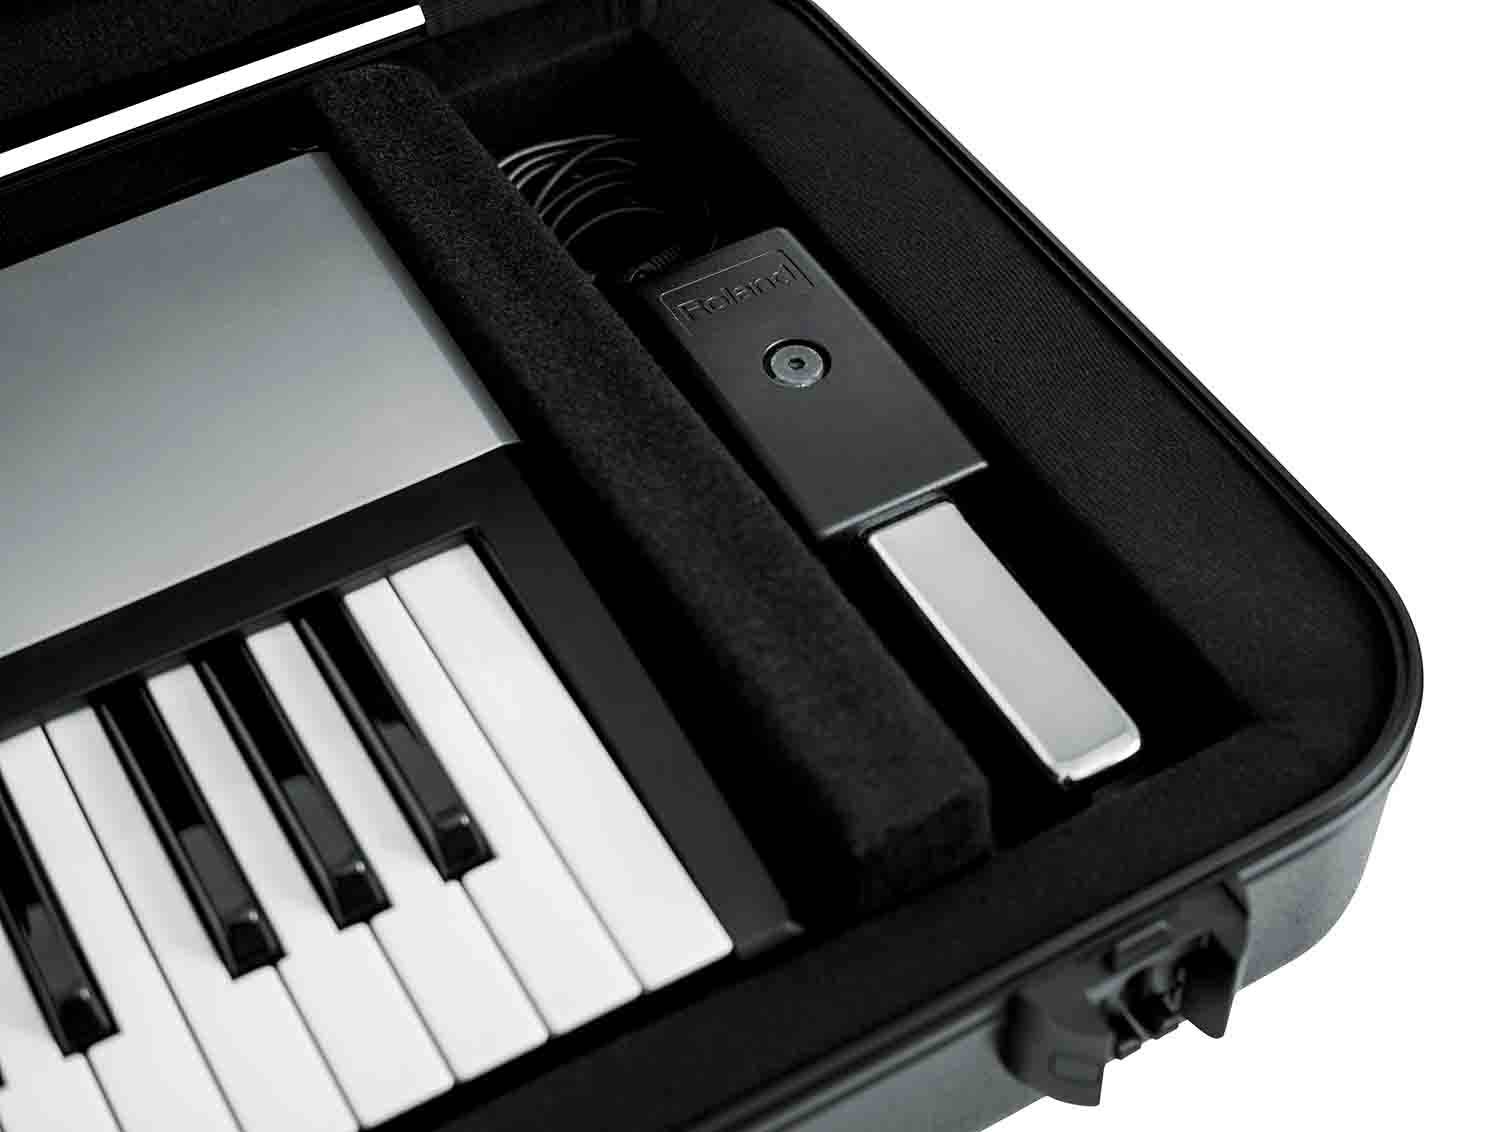 Gator Cases GTSA-KEY49 Keyboard Case for 49-note Keyboards - Hollywood DJ